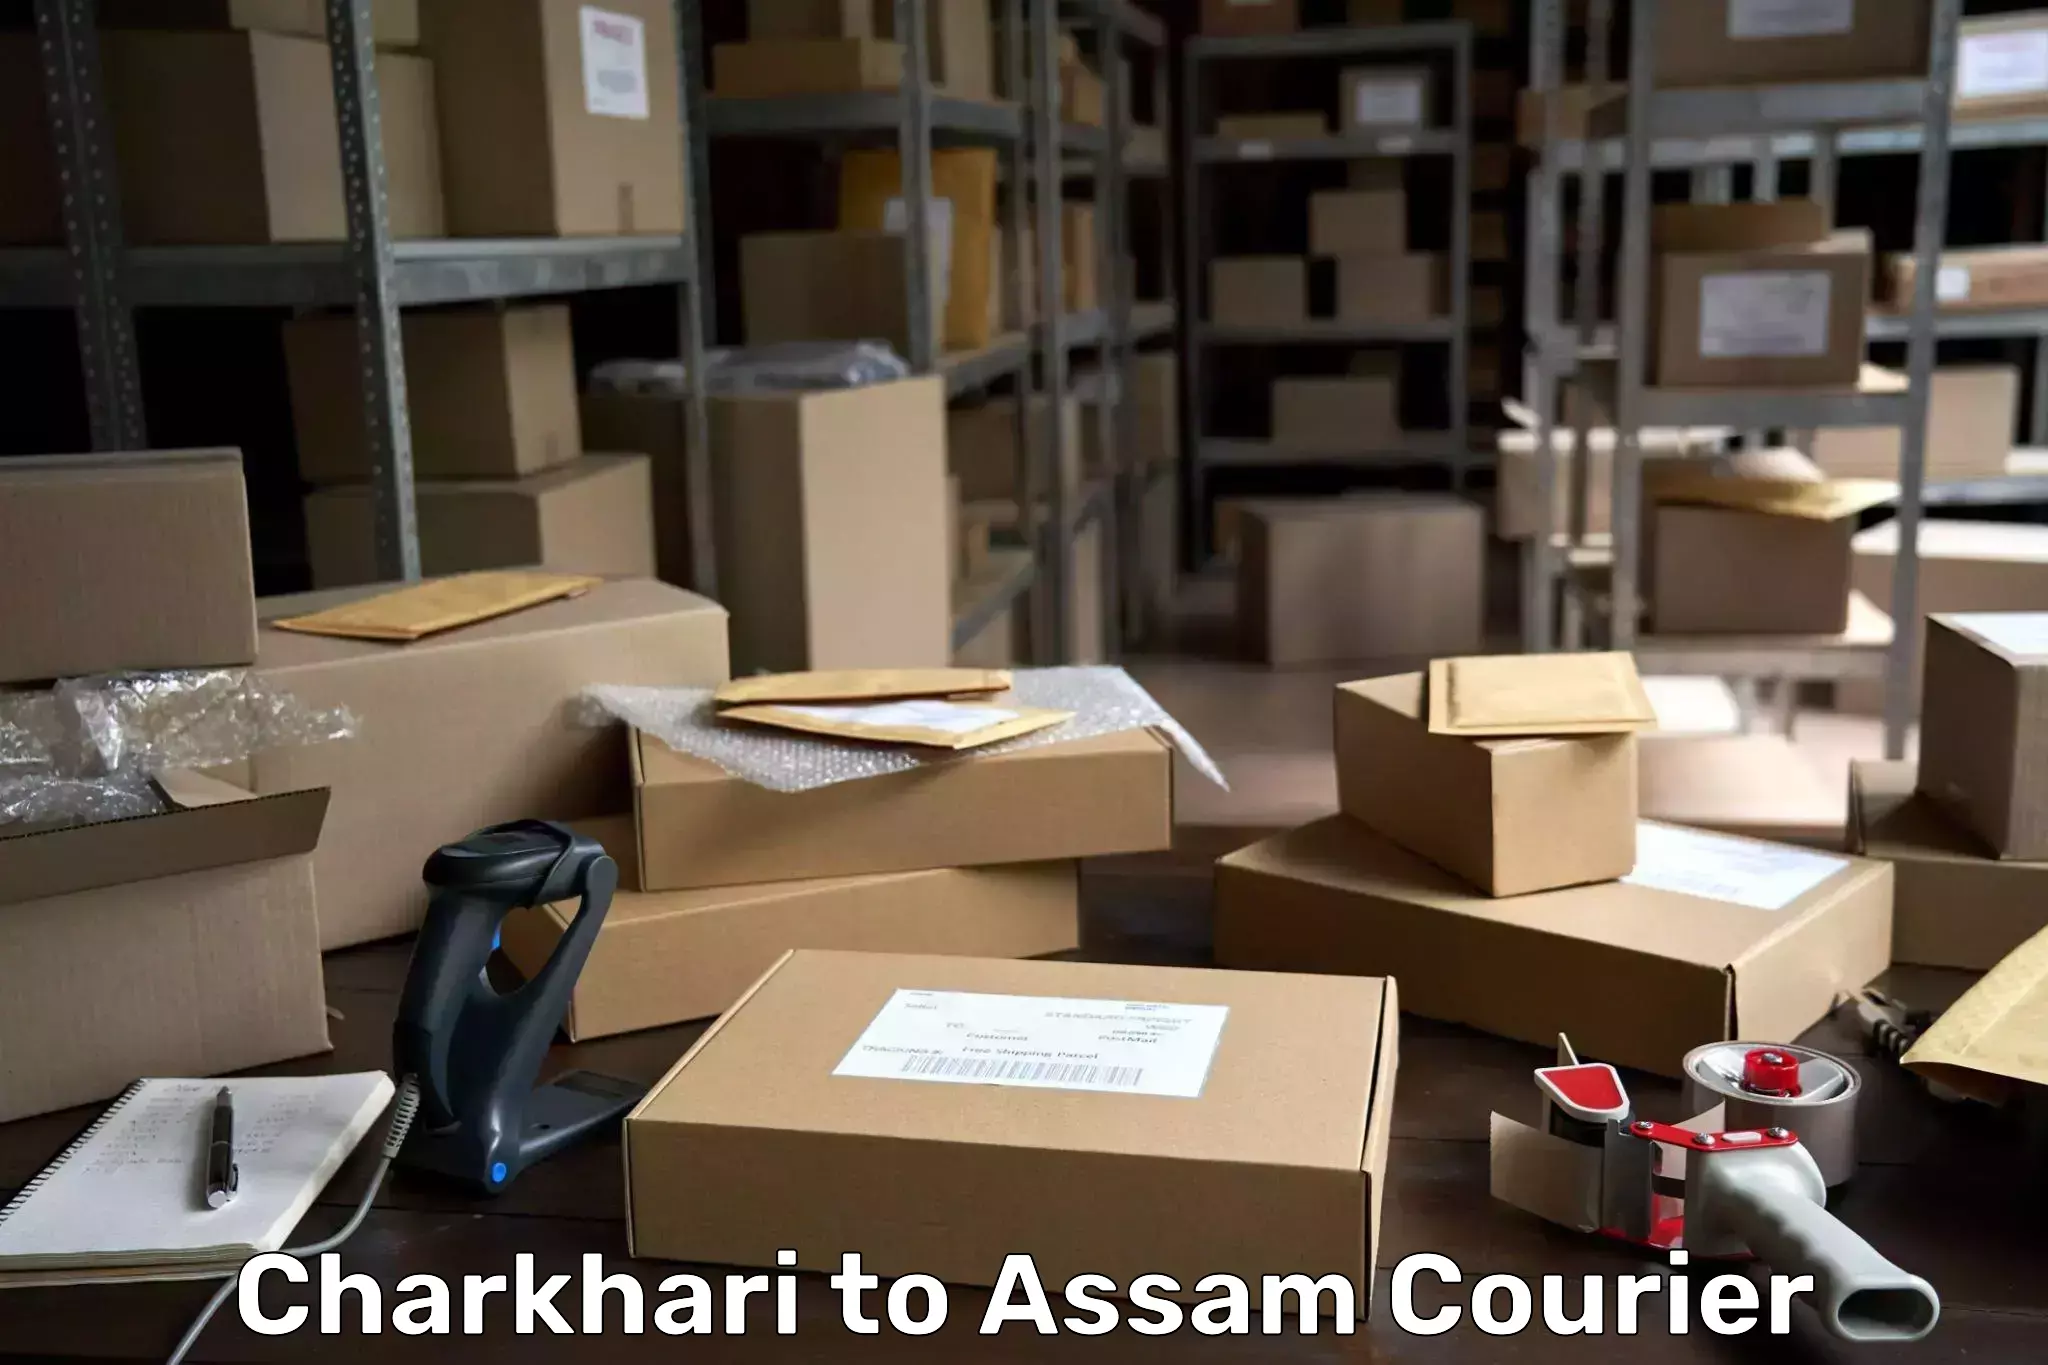 International parcel service Charkhari to Assam